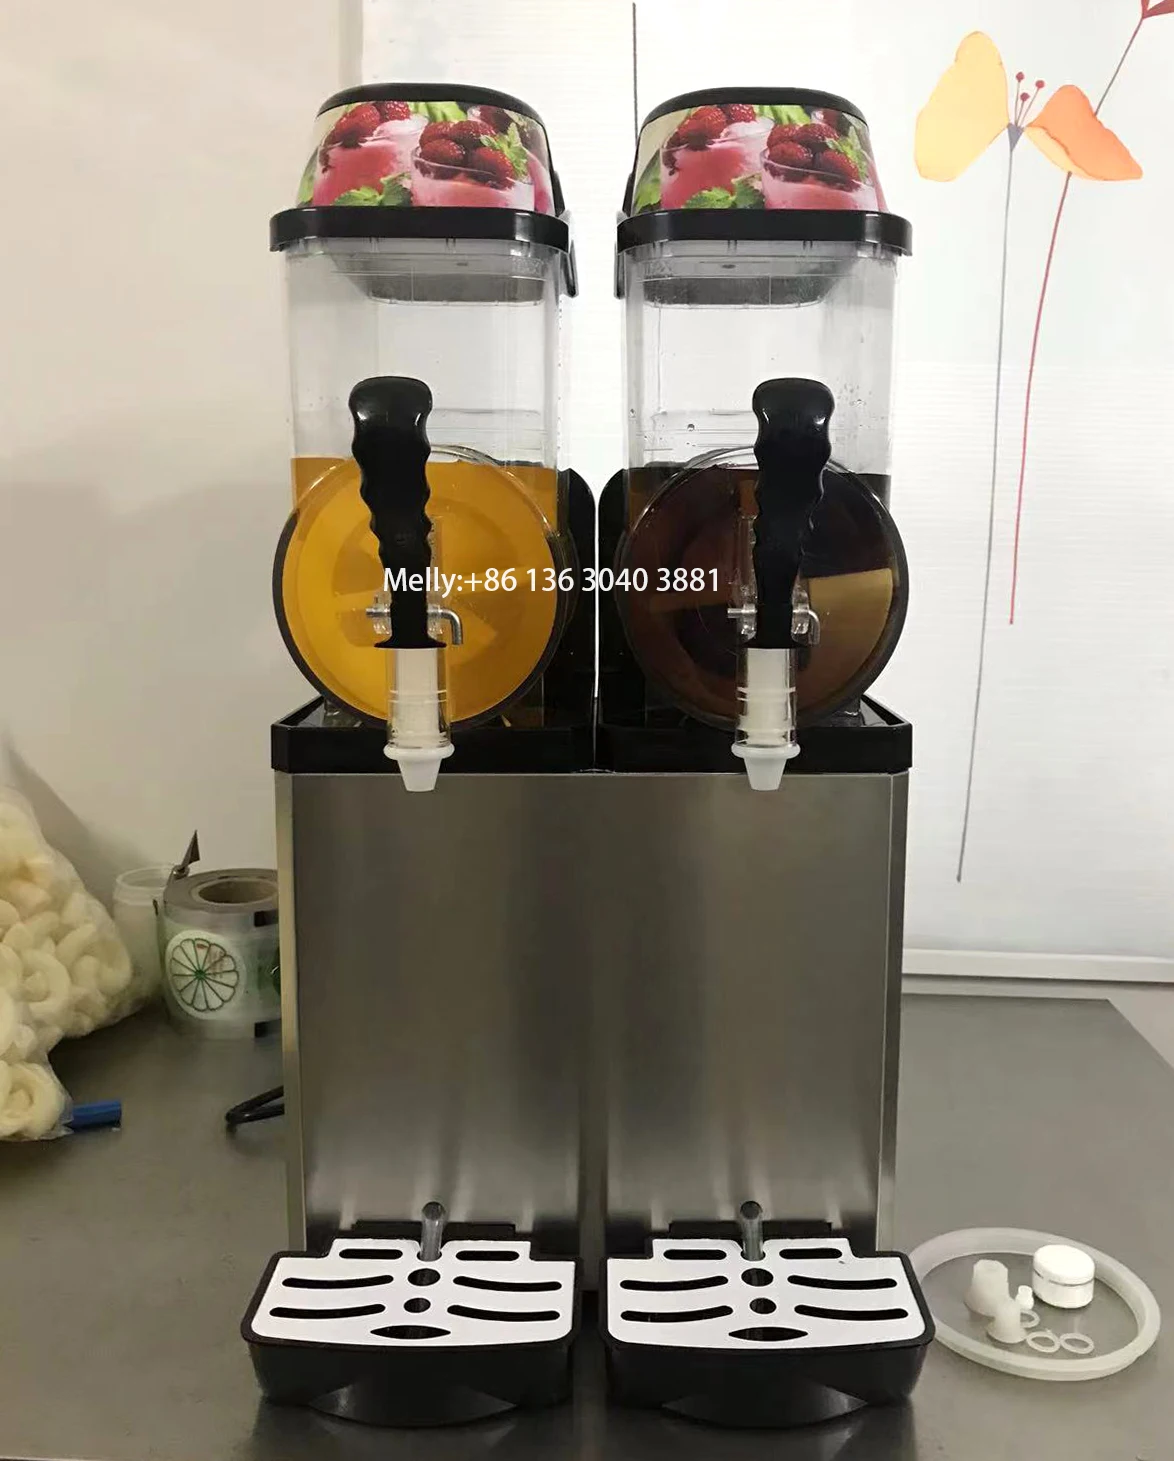 2-Tank Commercial Frozen Drink Slush Machine Smoothie Maker Machine 220V